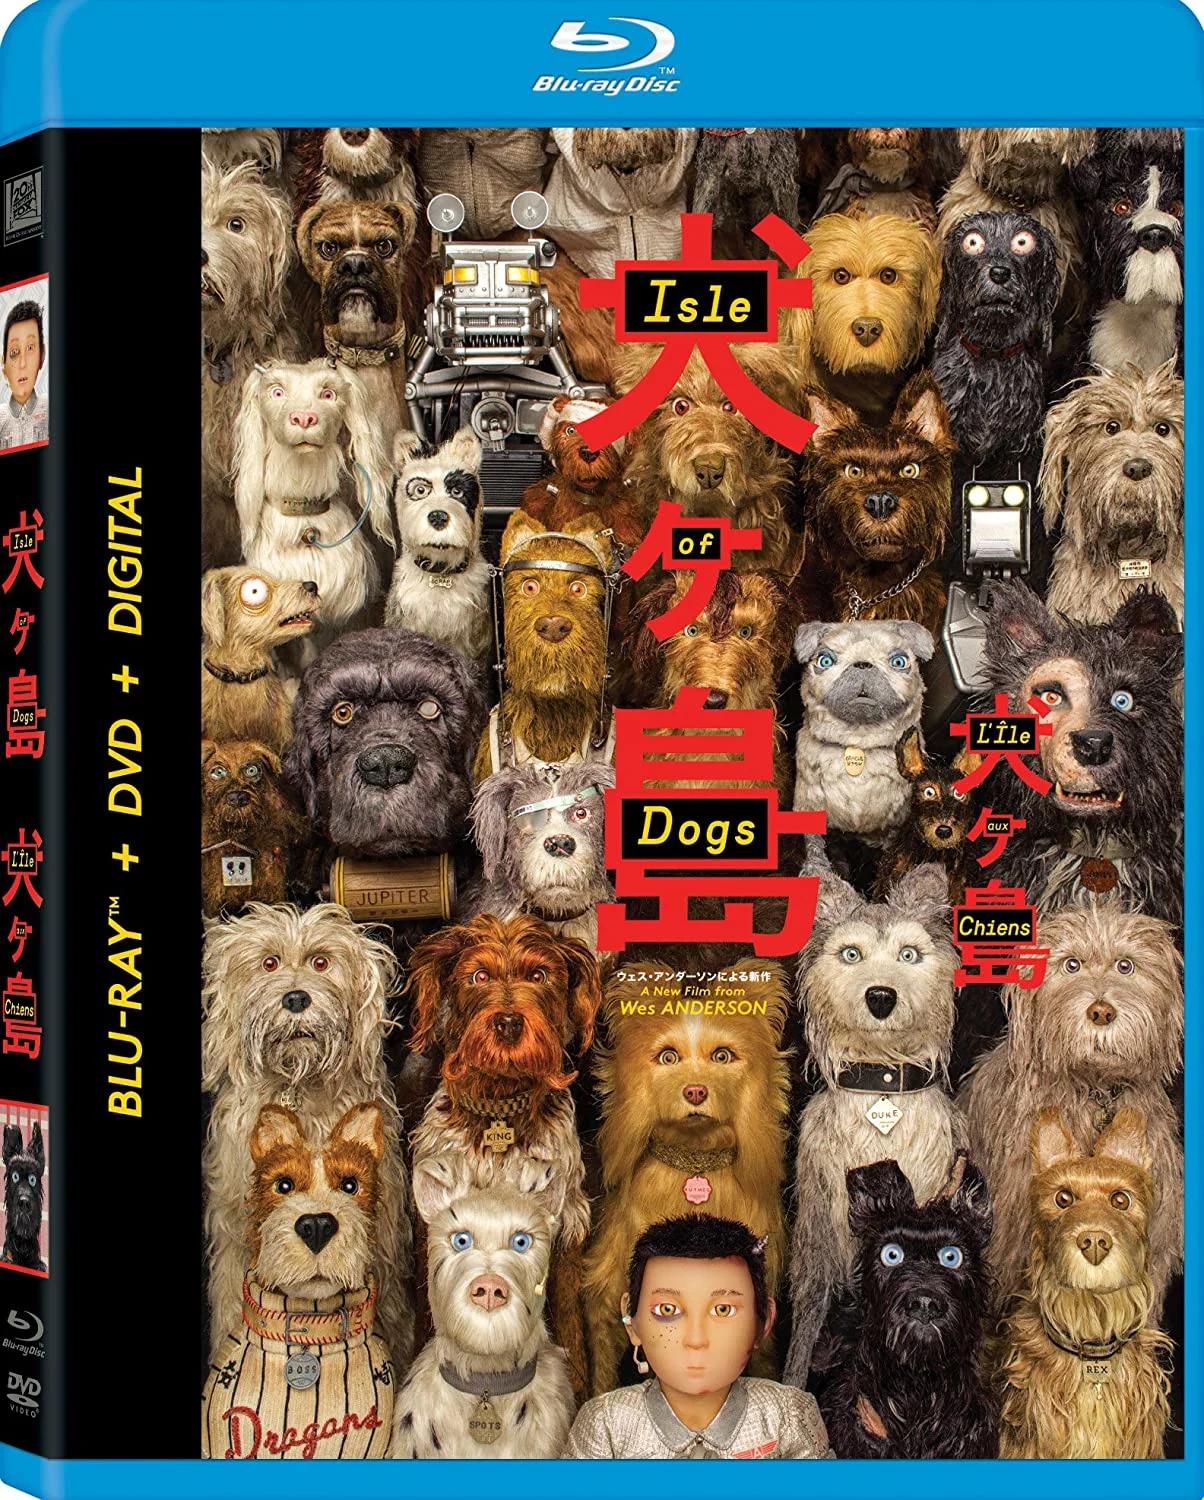 Isle of Dogs (Blu-ray/DVD Combo) on MovieShack